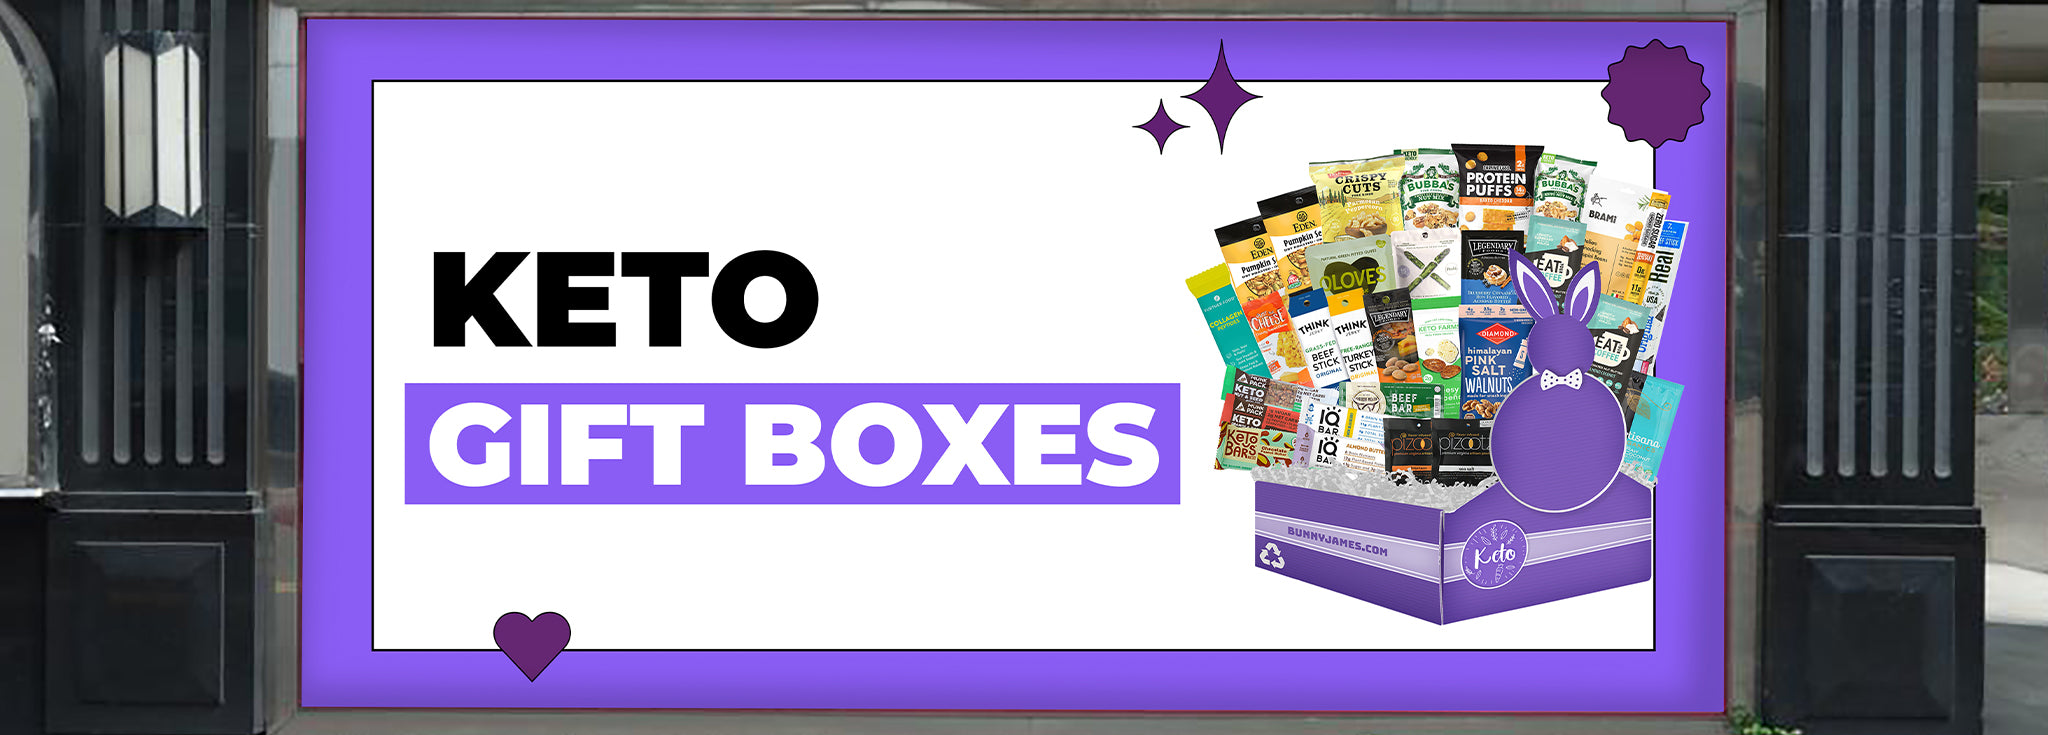 Low-Carb Keto Jerky Gift Box – Bunny James Boxes